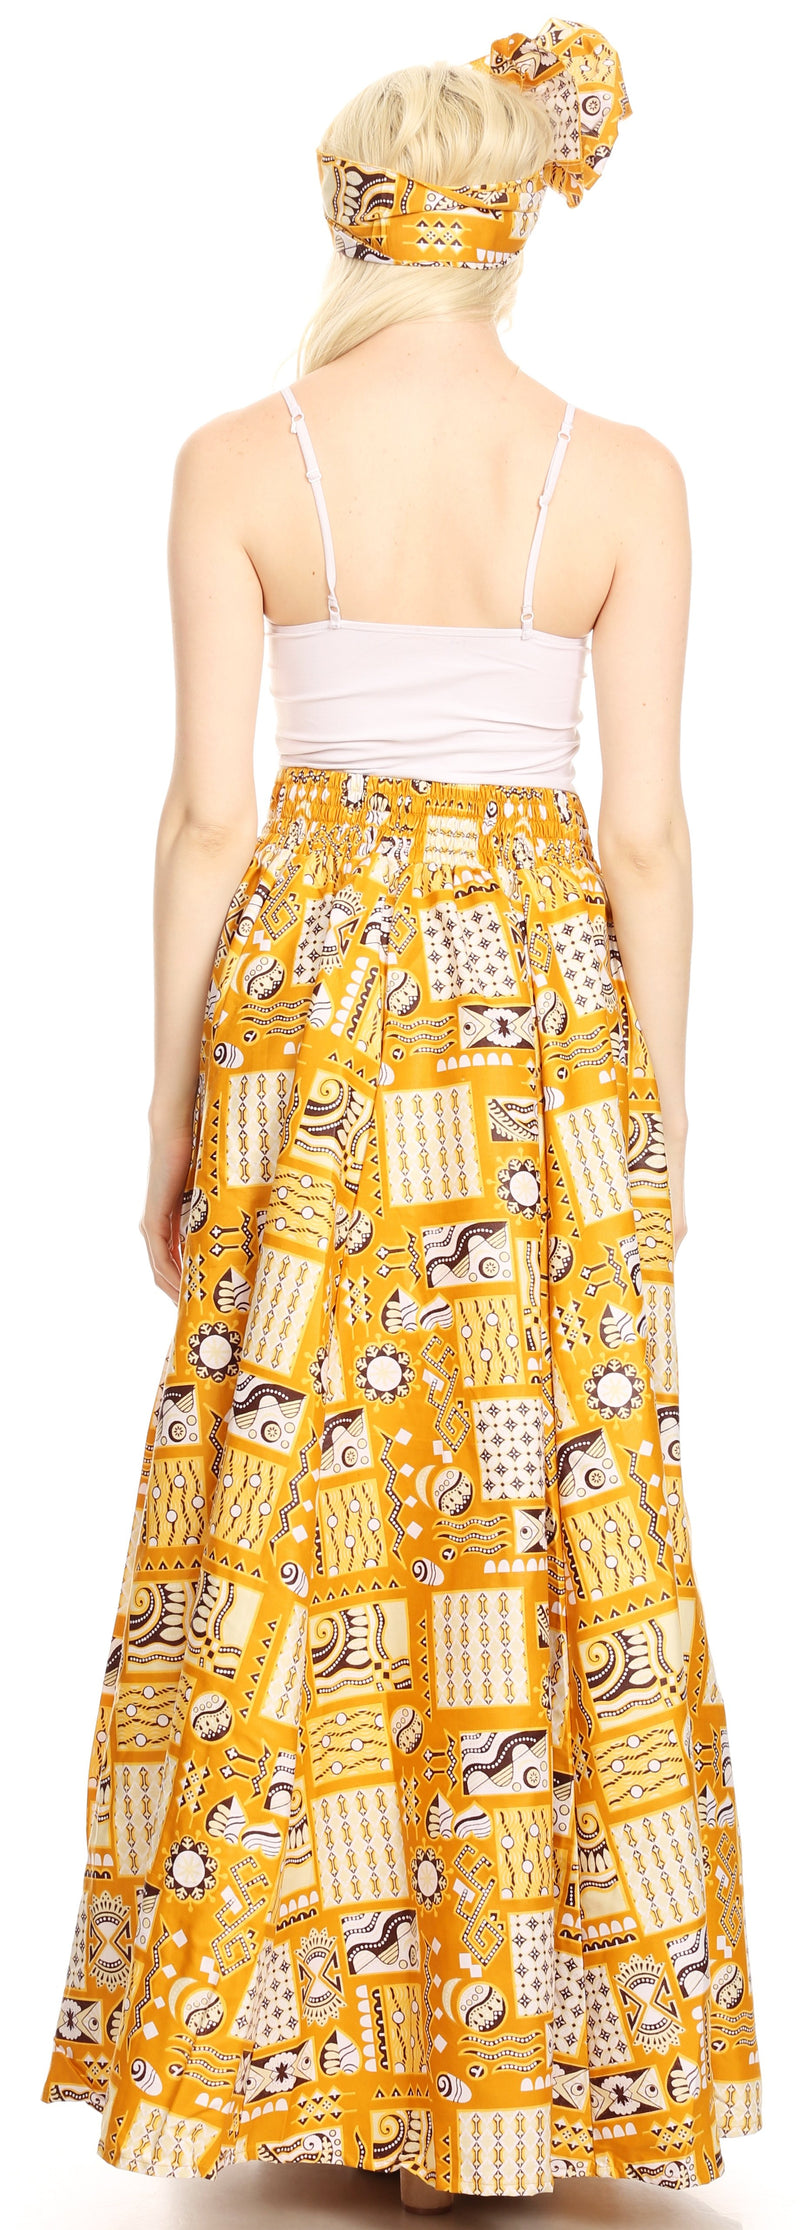 Sakkas Ami Women's Maxi Long African Ankara Print Skirt Pockets & Elastic Waist